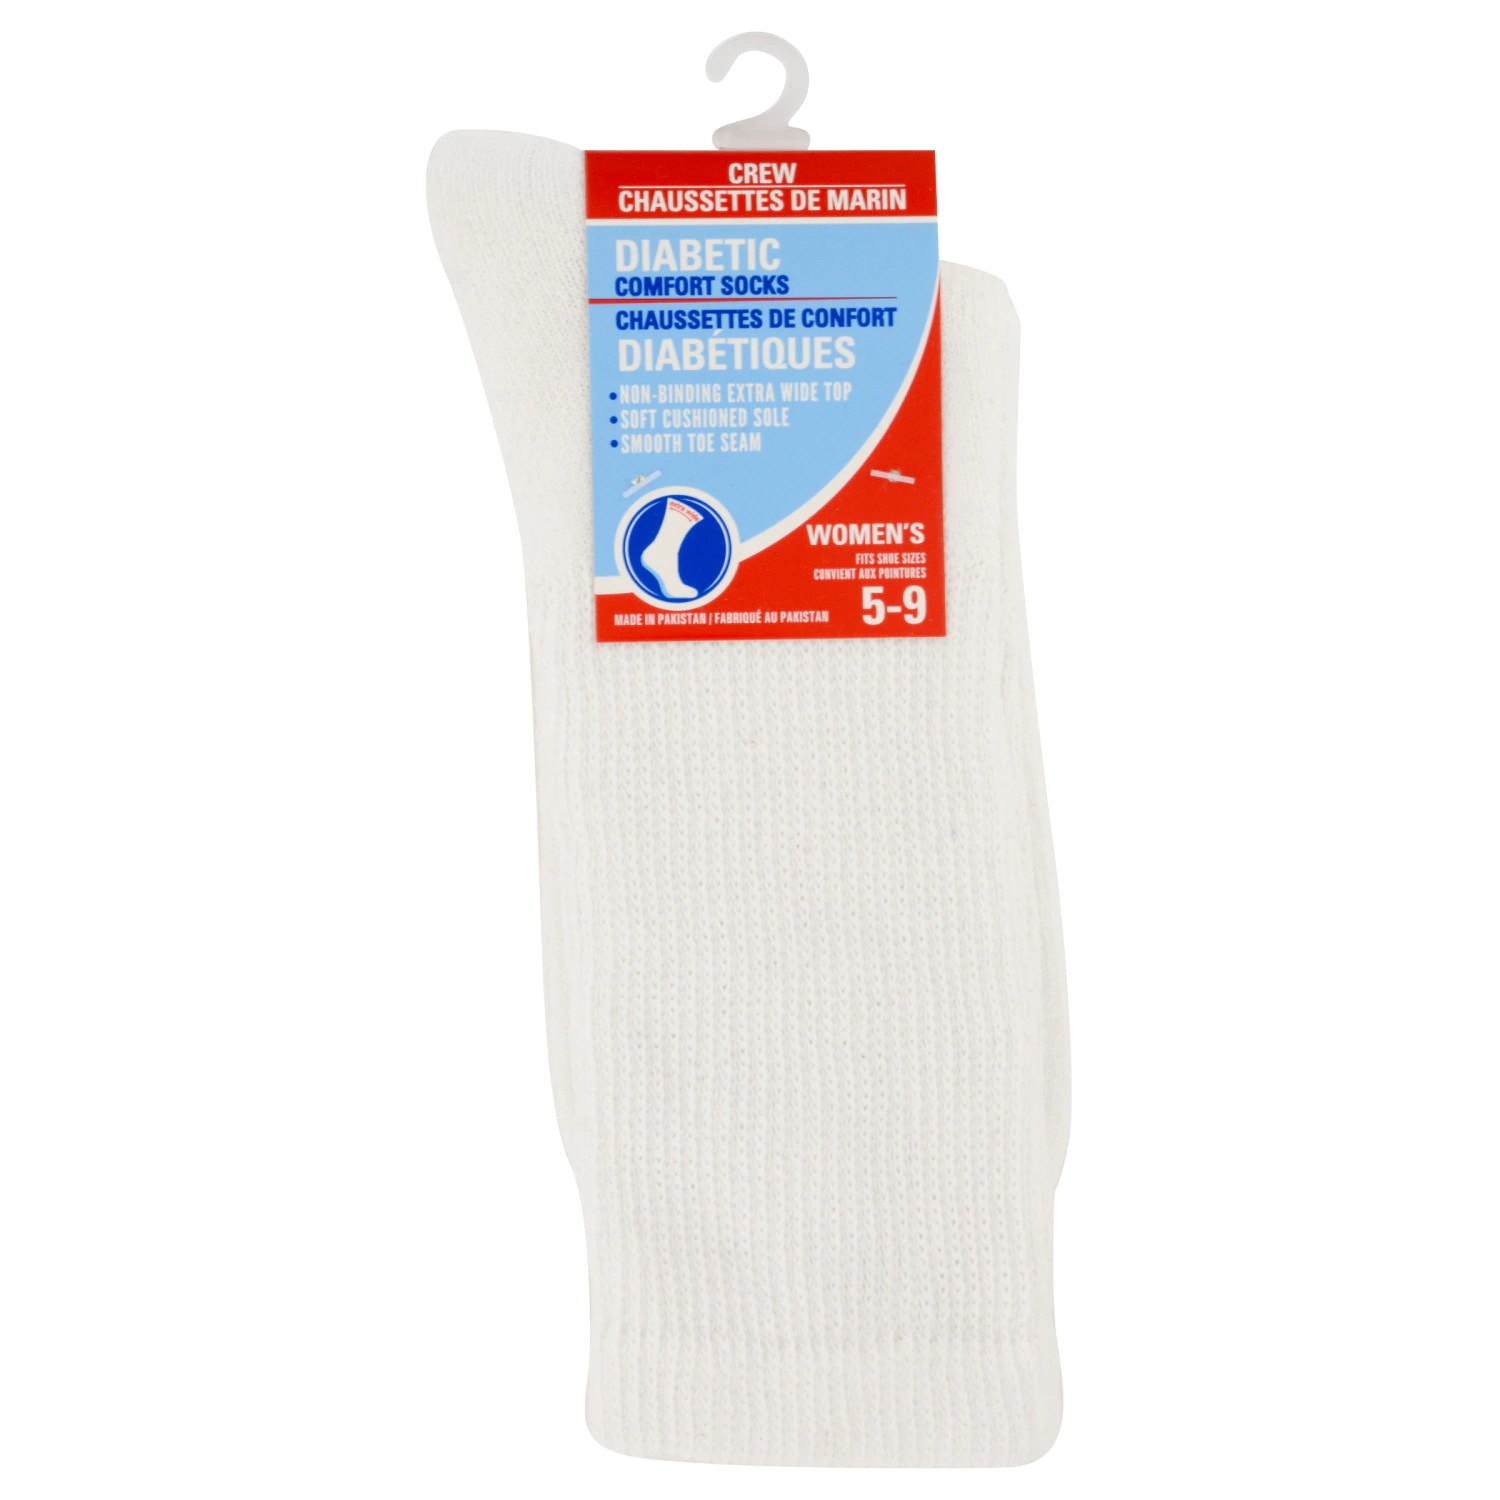 Women's White Diabetic Crew Socks - set of 3 pairs